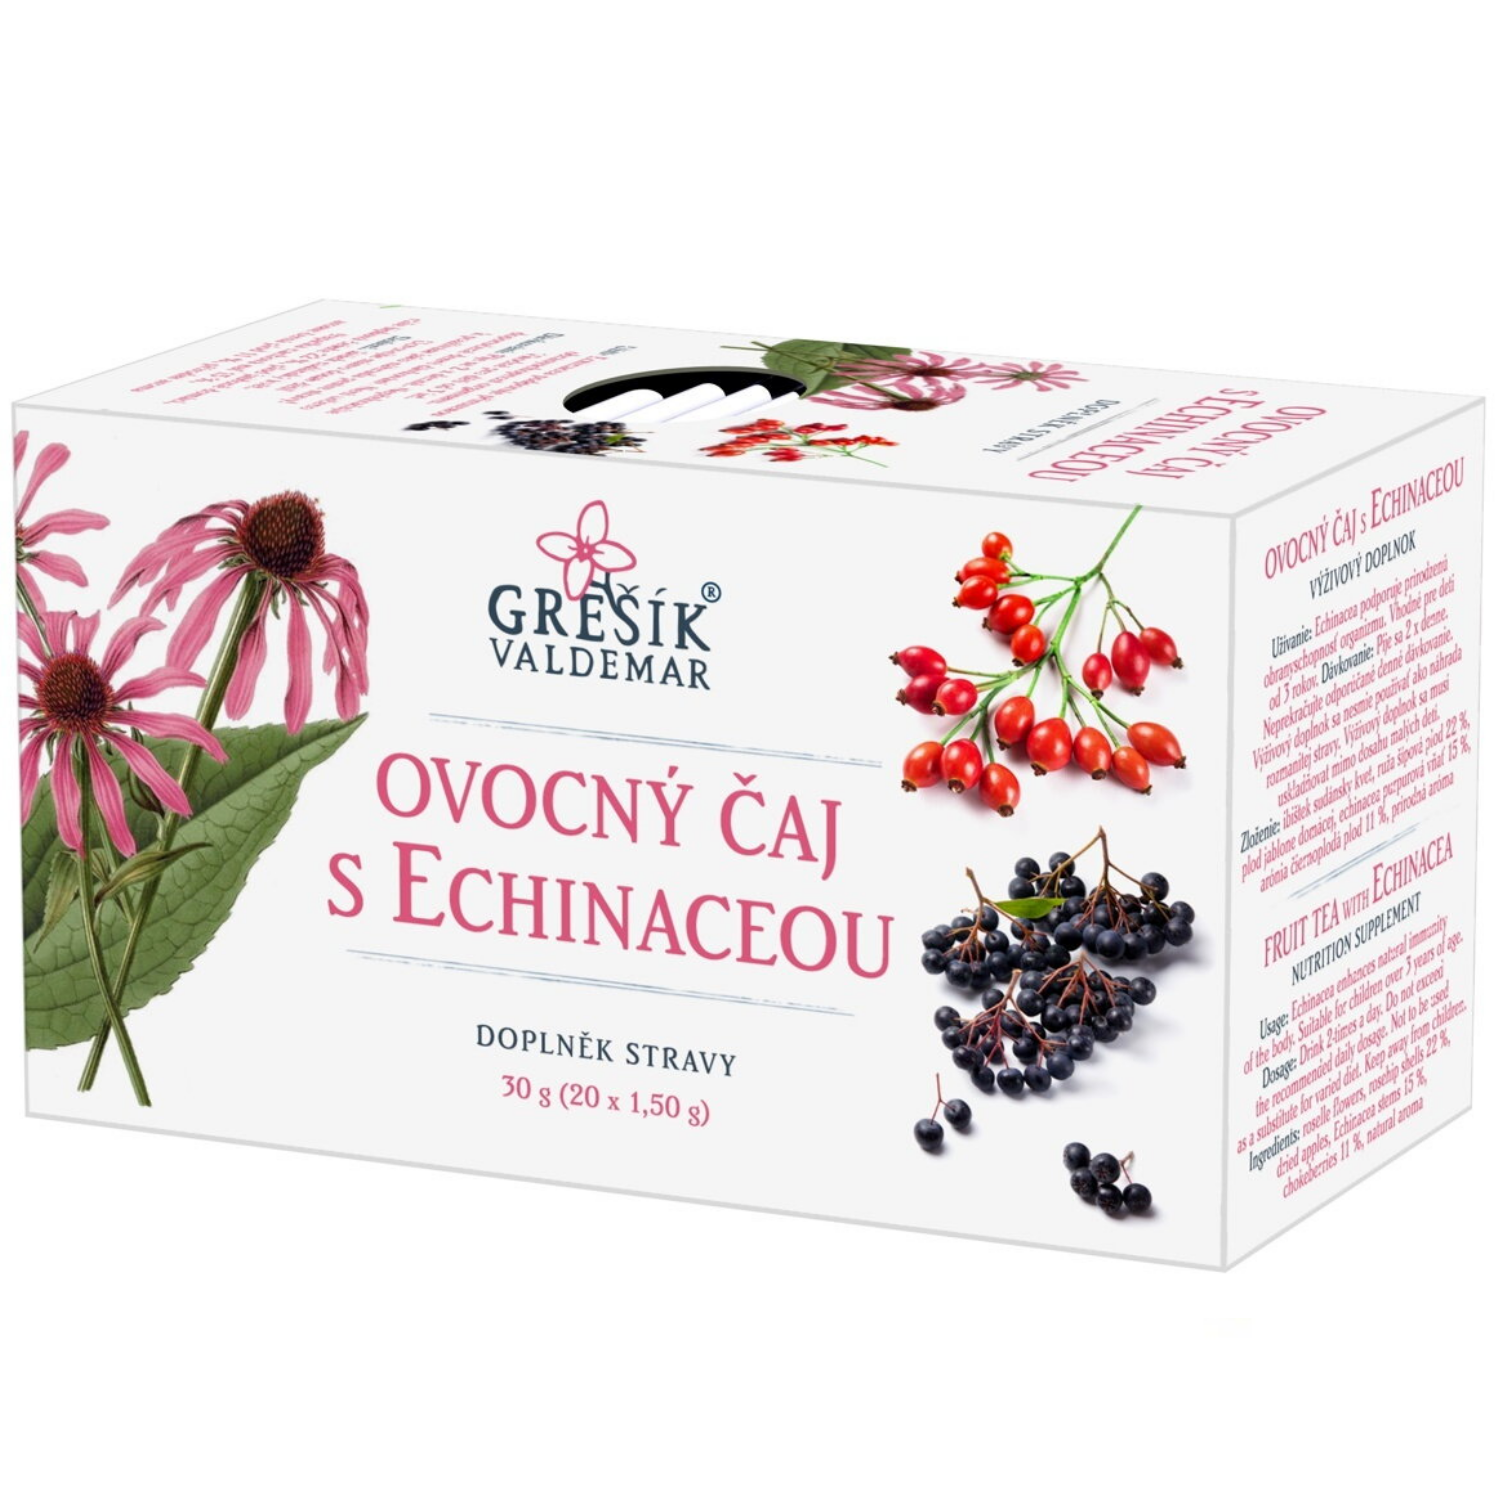 Ovocný čaj s echinaceou (30g)